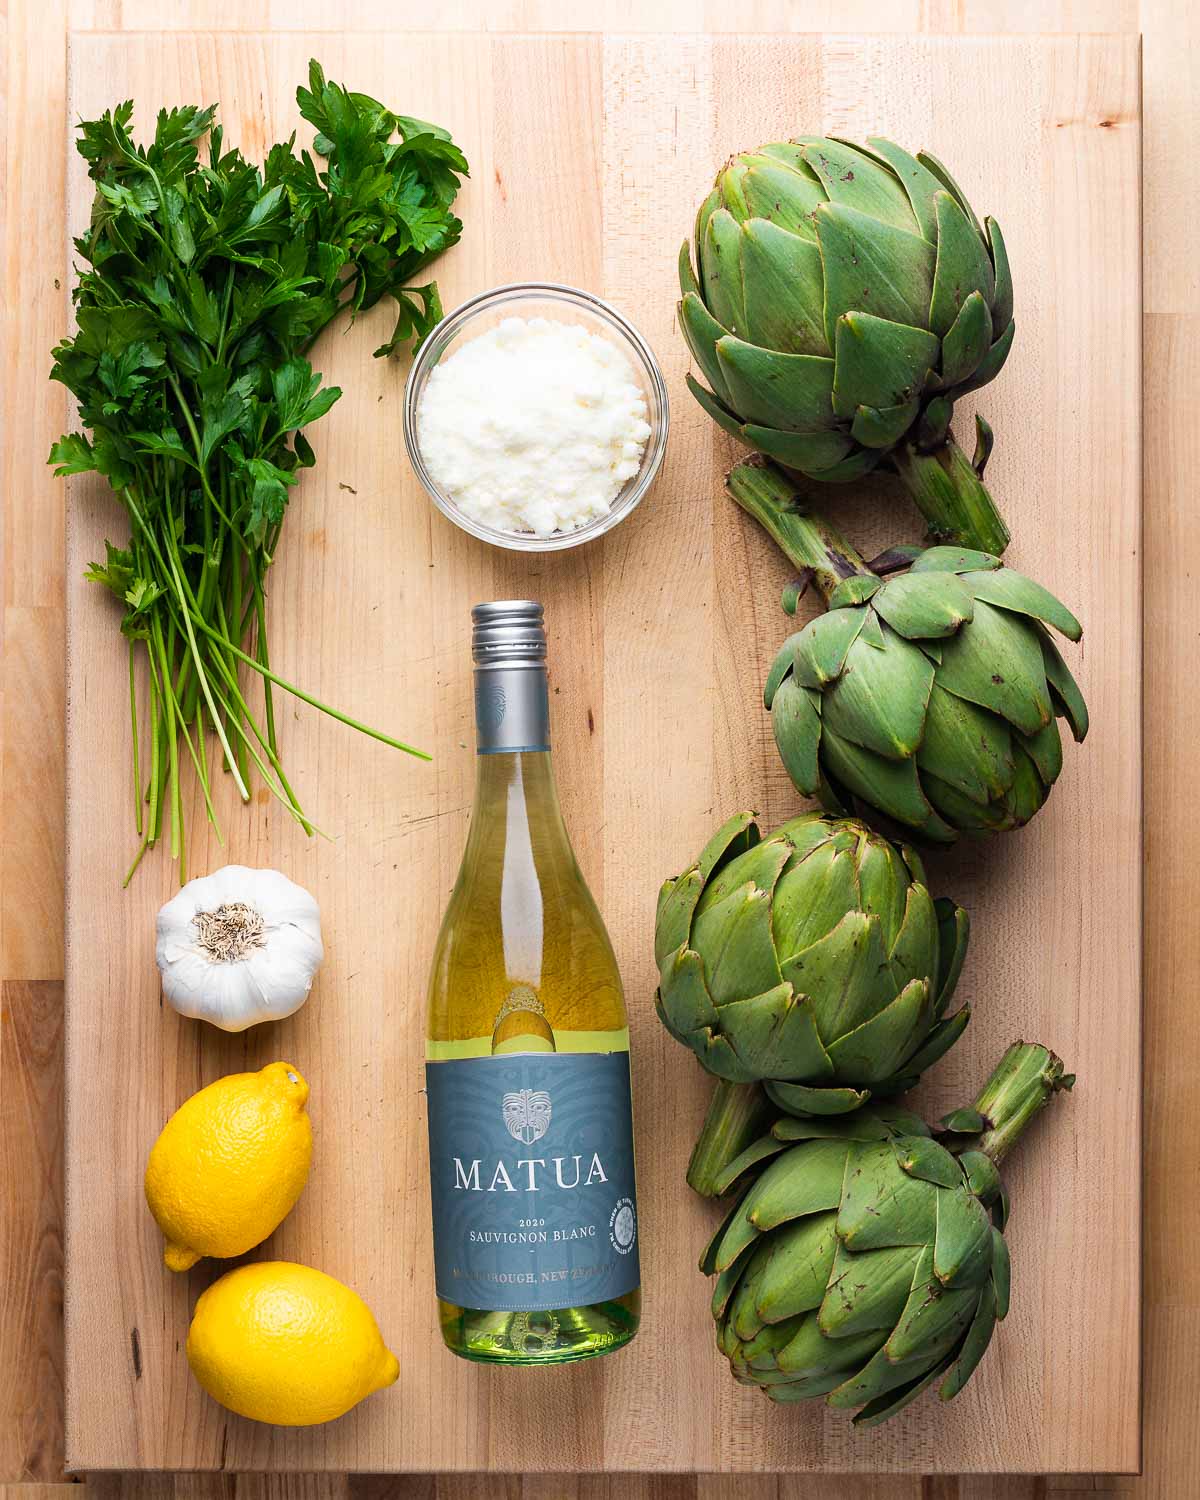 Ingredients shown: parsley, cheese, artichokes, white wine, lemons, and garlic.